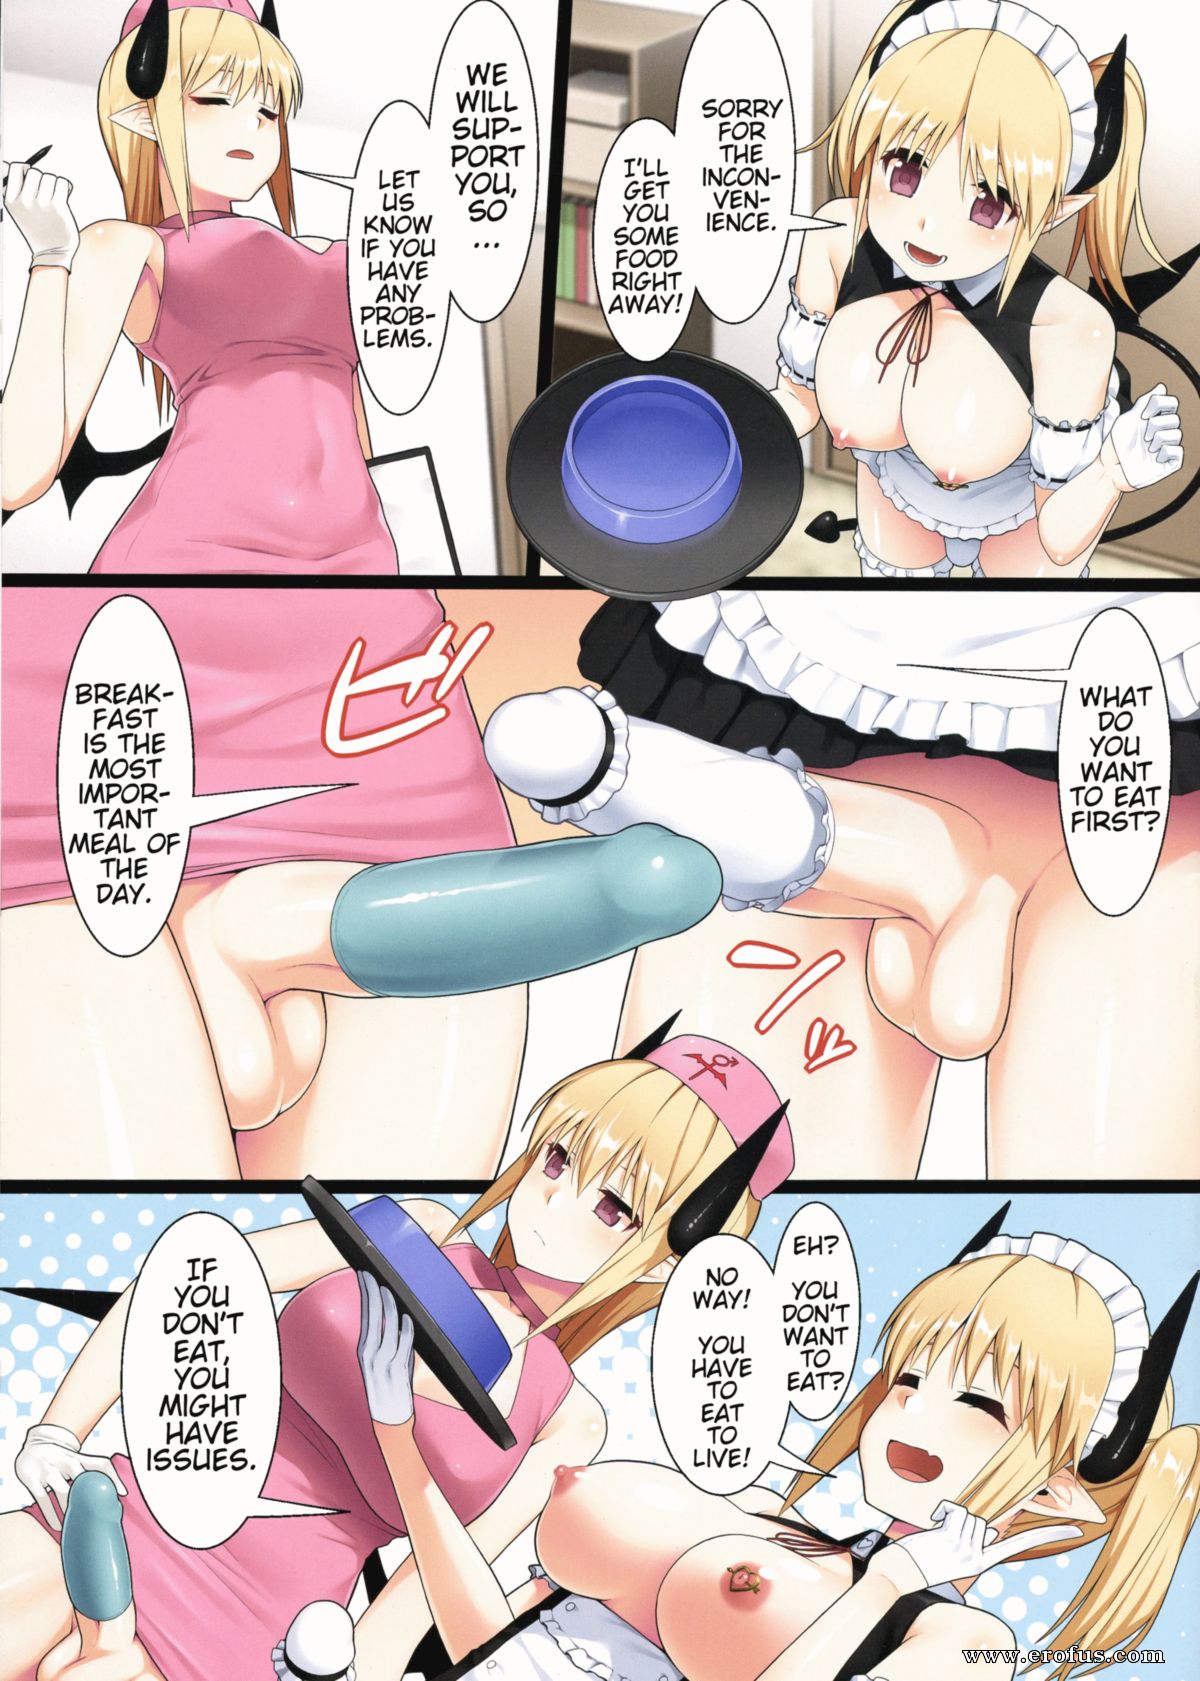 Futa succubus threesome hentai comic